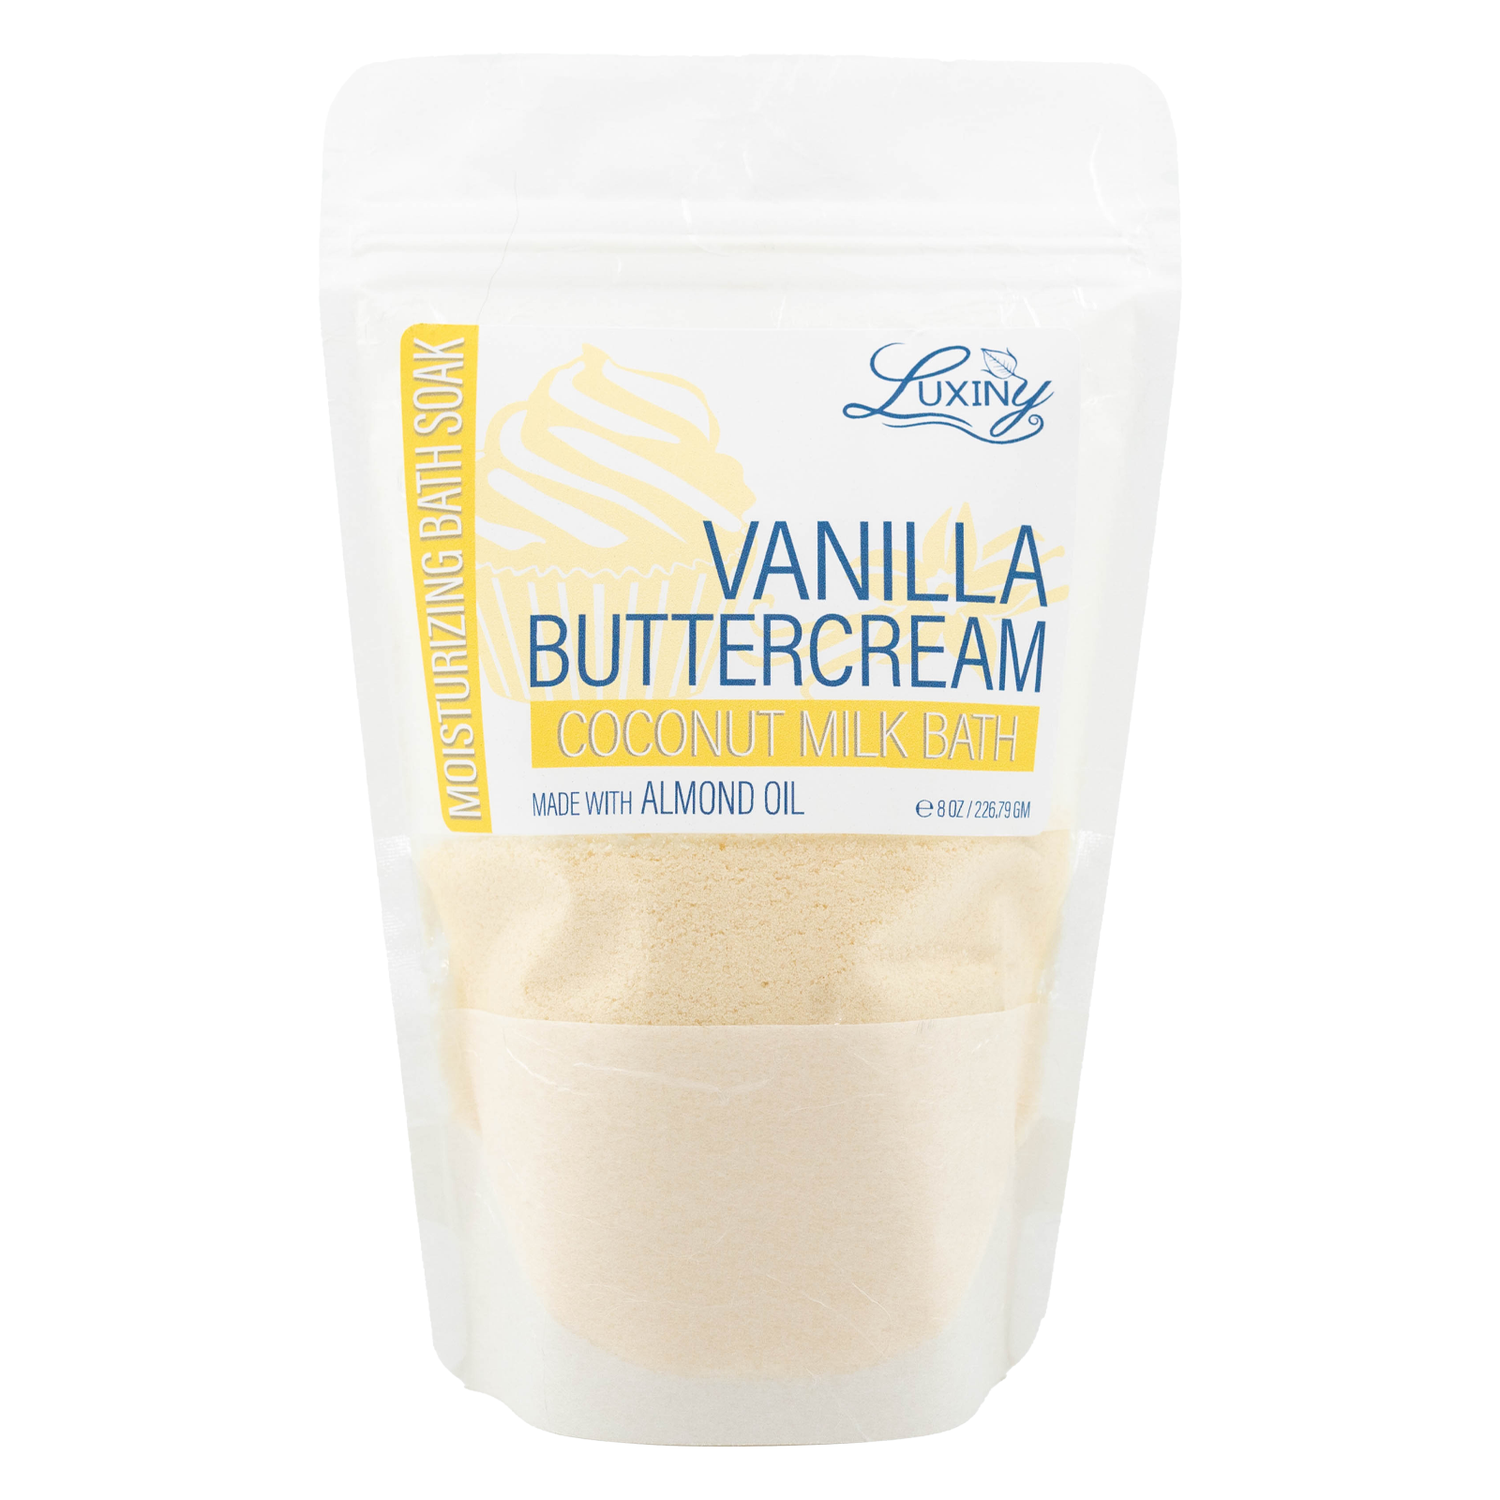 Vanilla Buttercream - Coconut Milk Bath - Holiday gifts